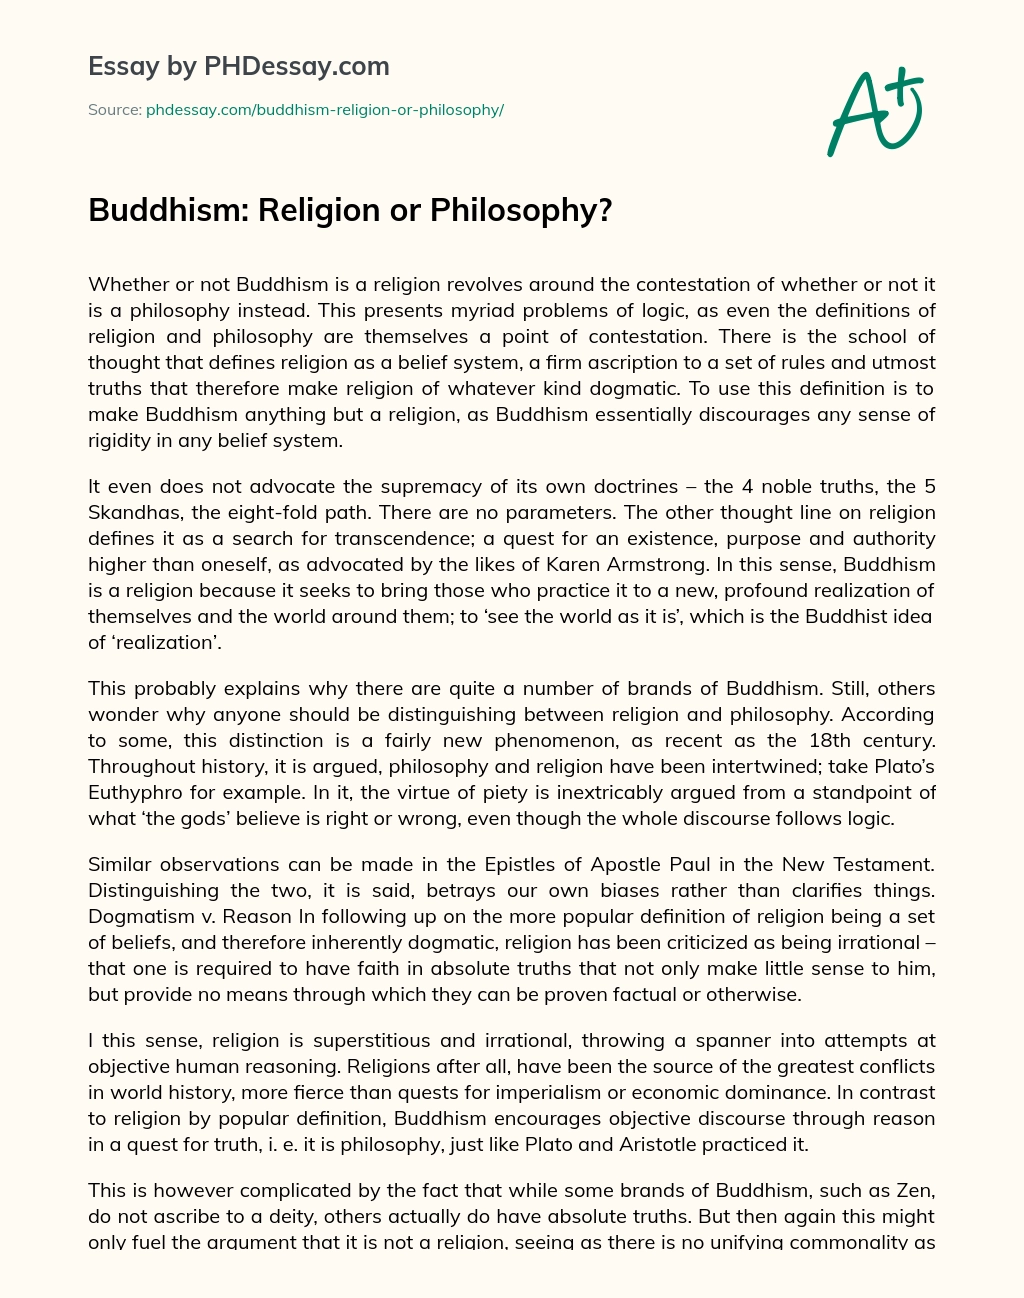 Buddhism: Religion or Philosophy? essay